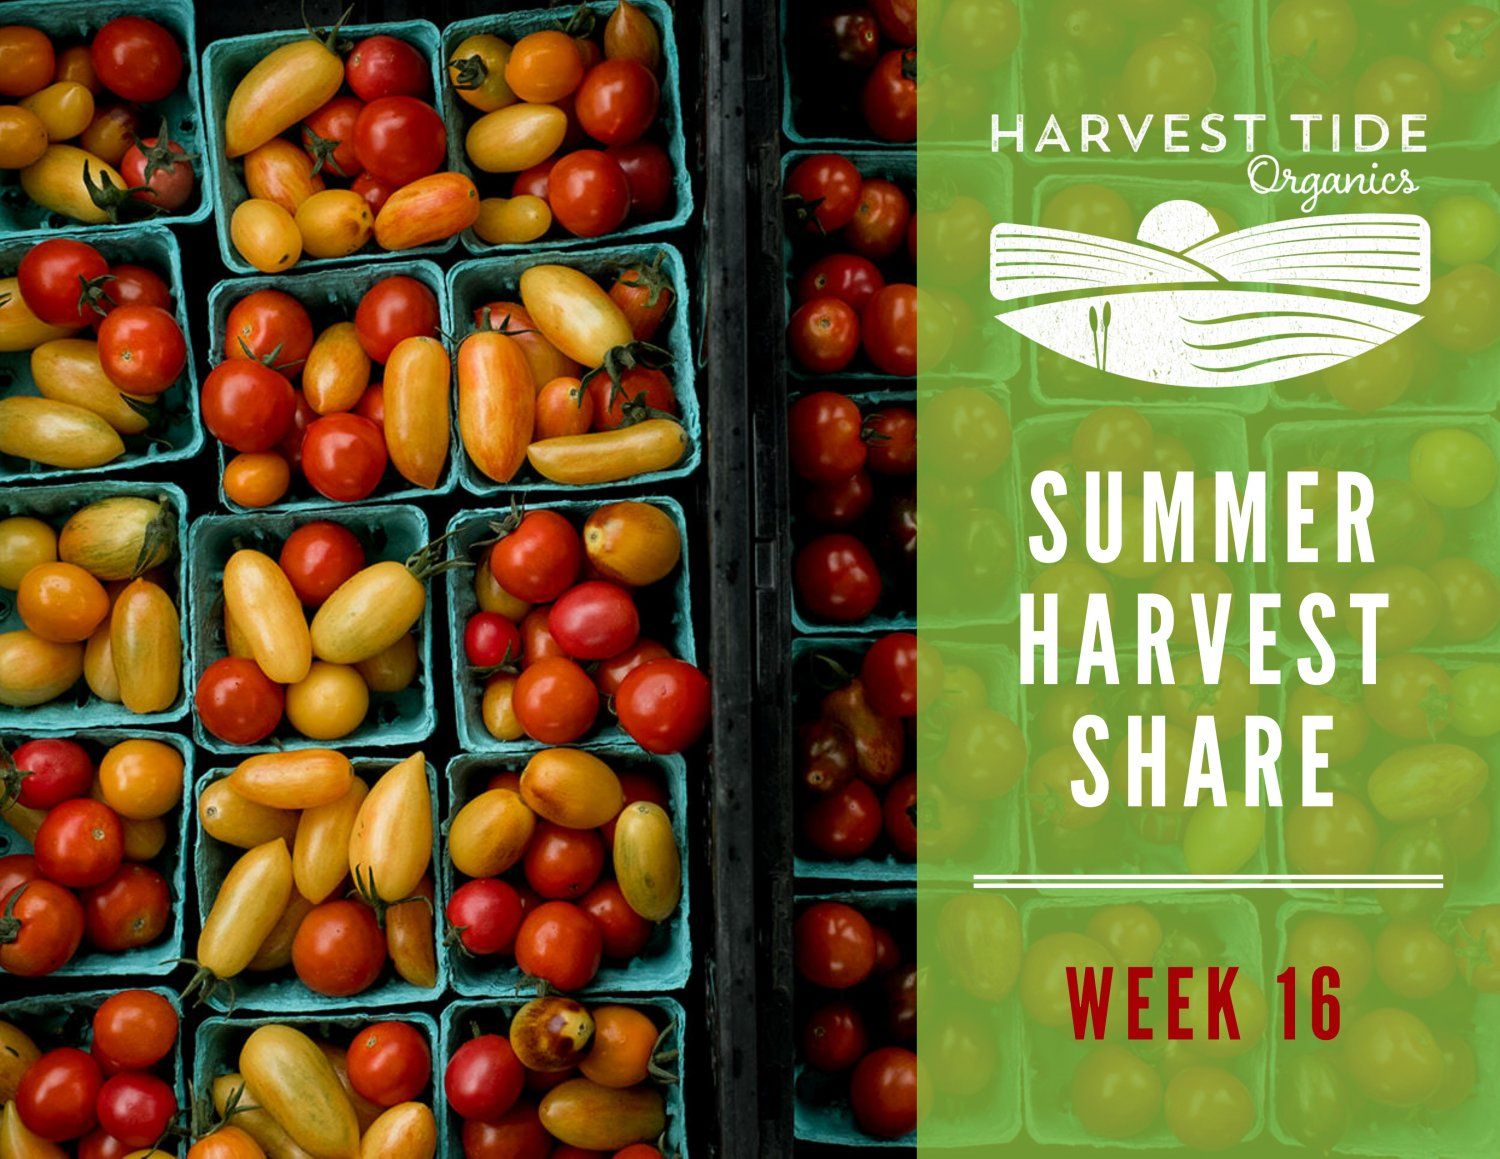 Next Happening: Summer Harvest Share - Week 16